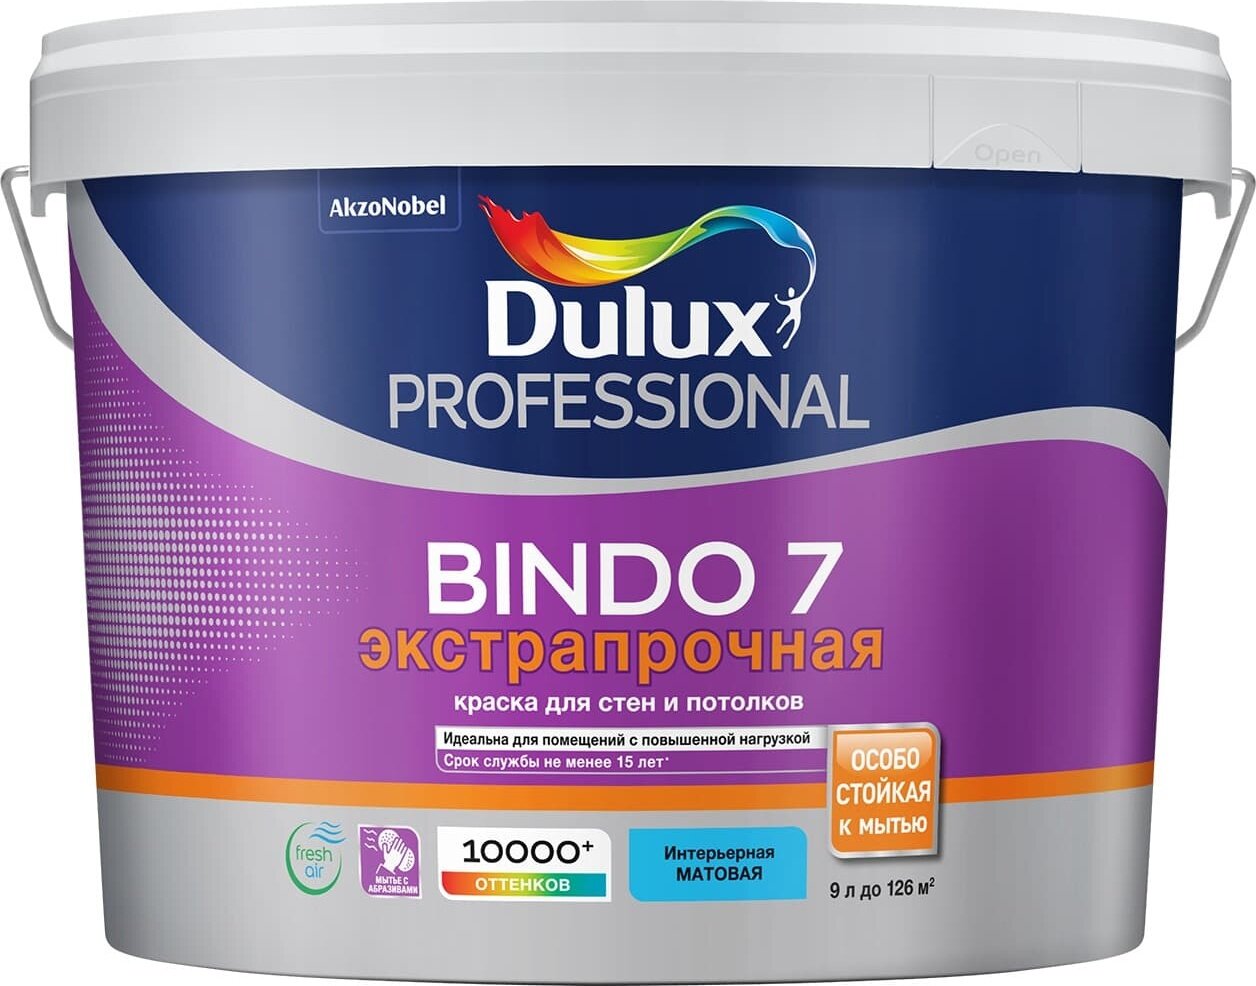 DULUX BINDO 7 экстрапрочная краска для стен и потолков, матовая, база BW (9л)